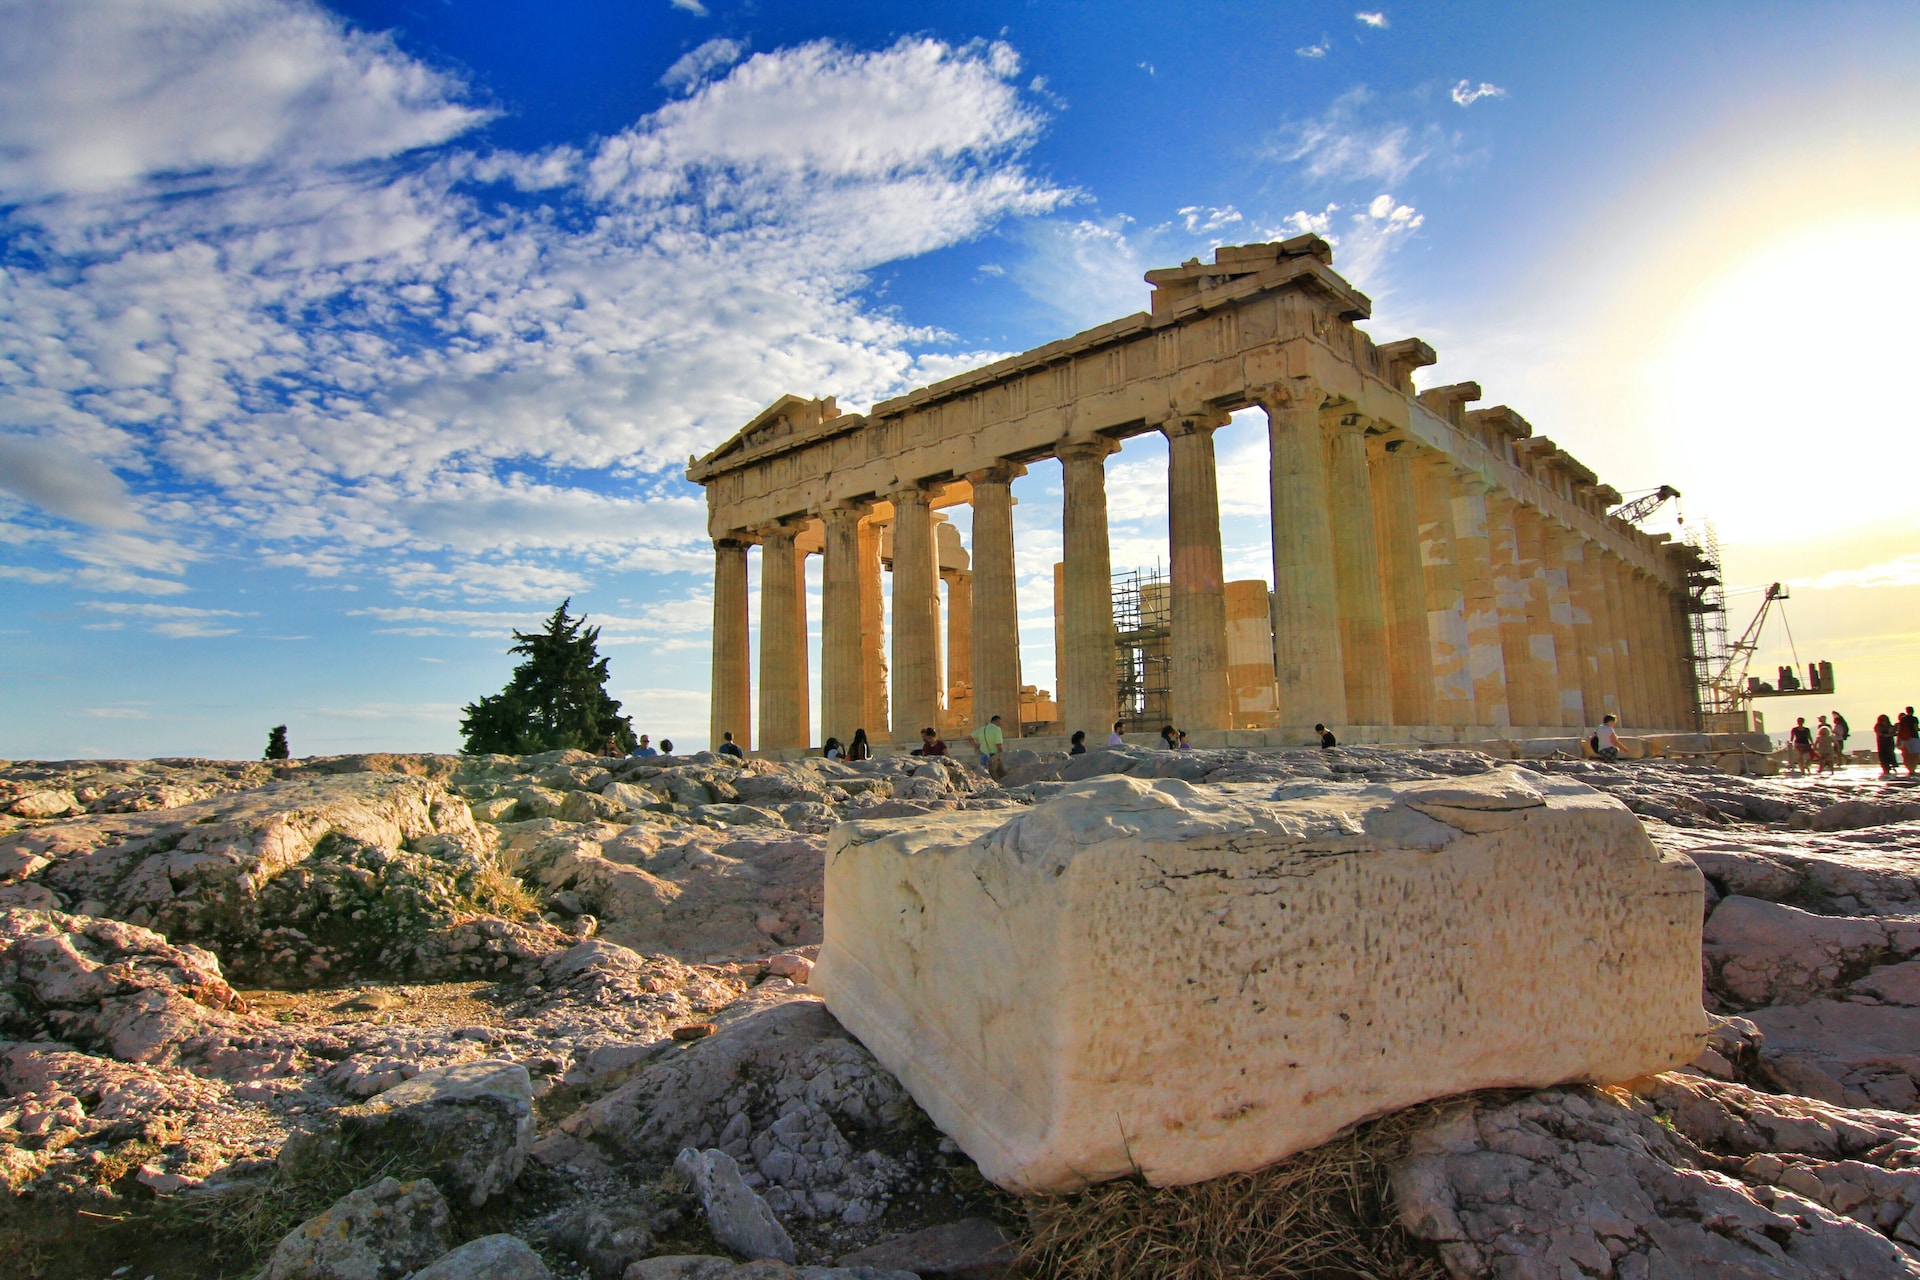 The Acropolis of Athens.
